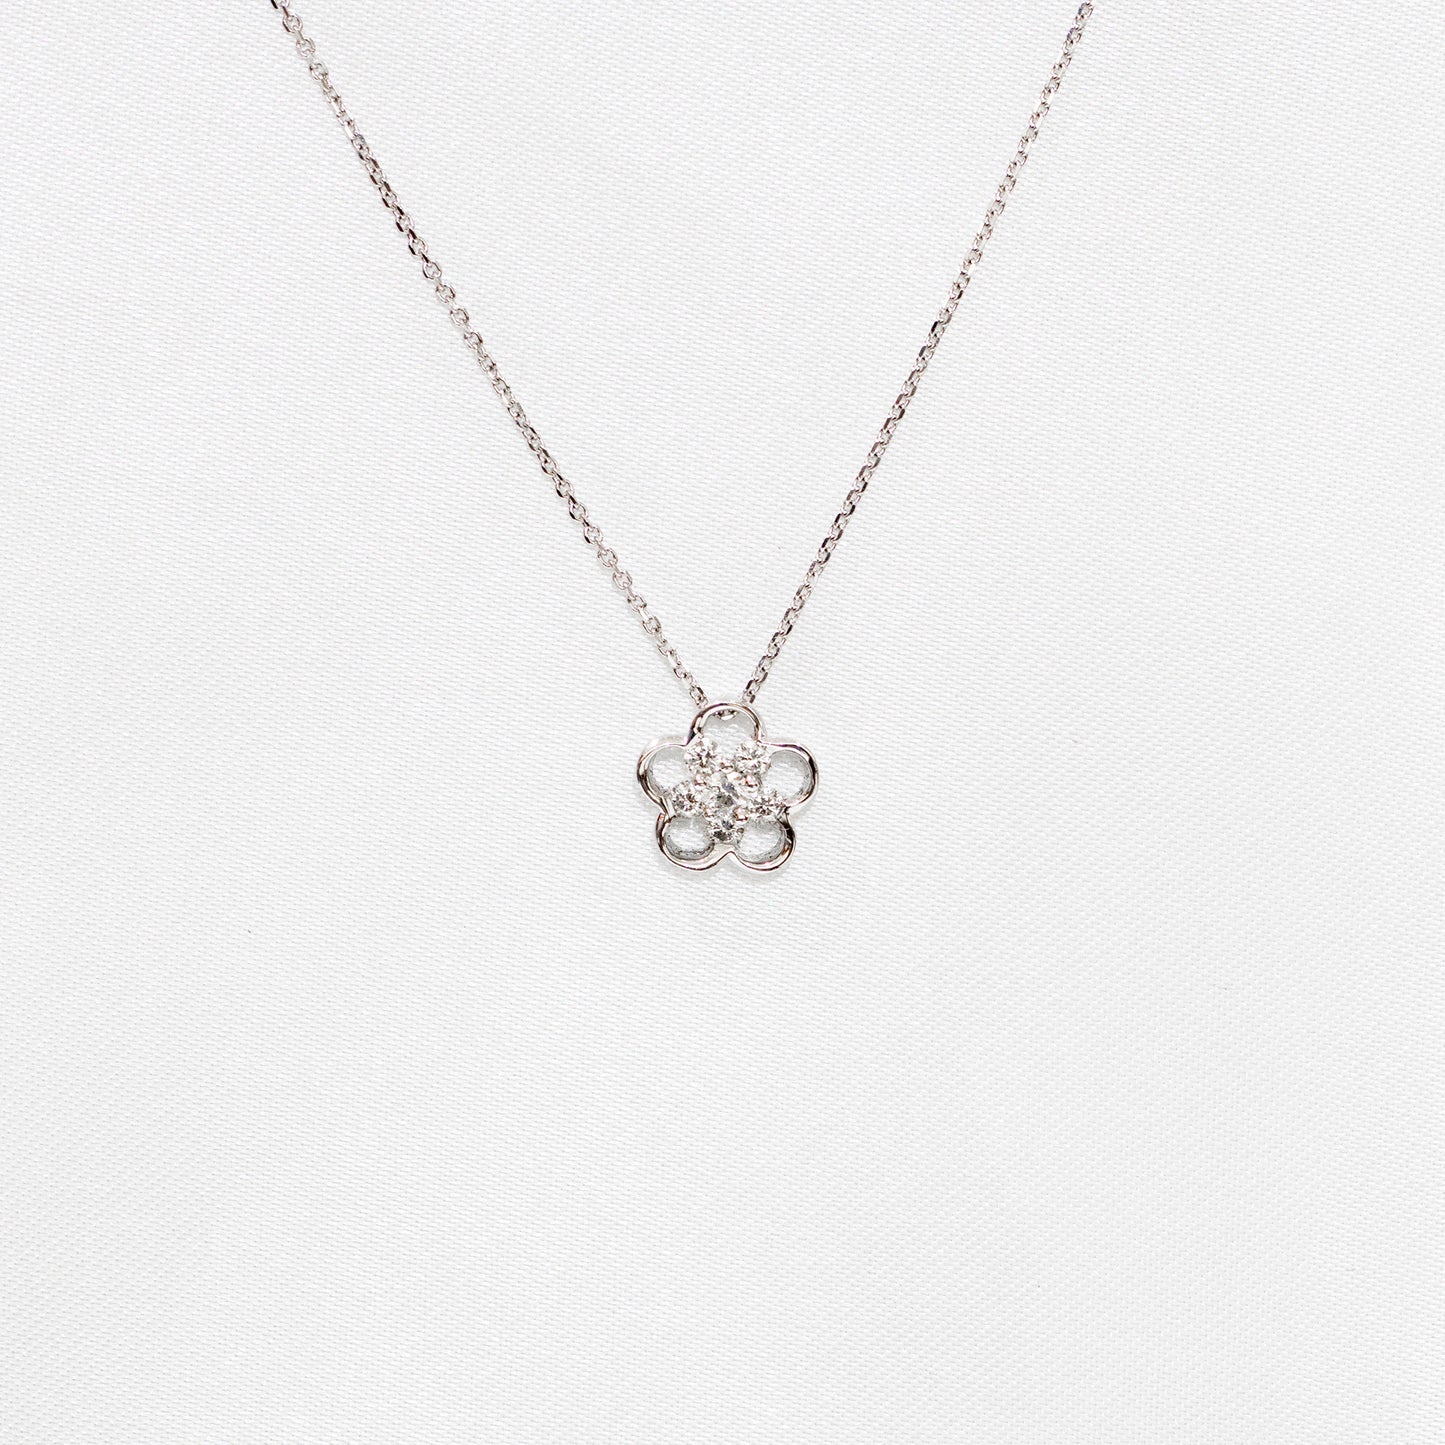 18k White Gold Flower Diamond Necklace 18k白金花形鑽石頸鍊